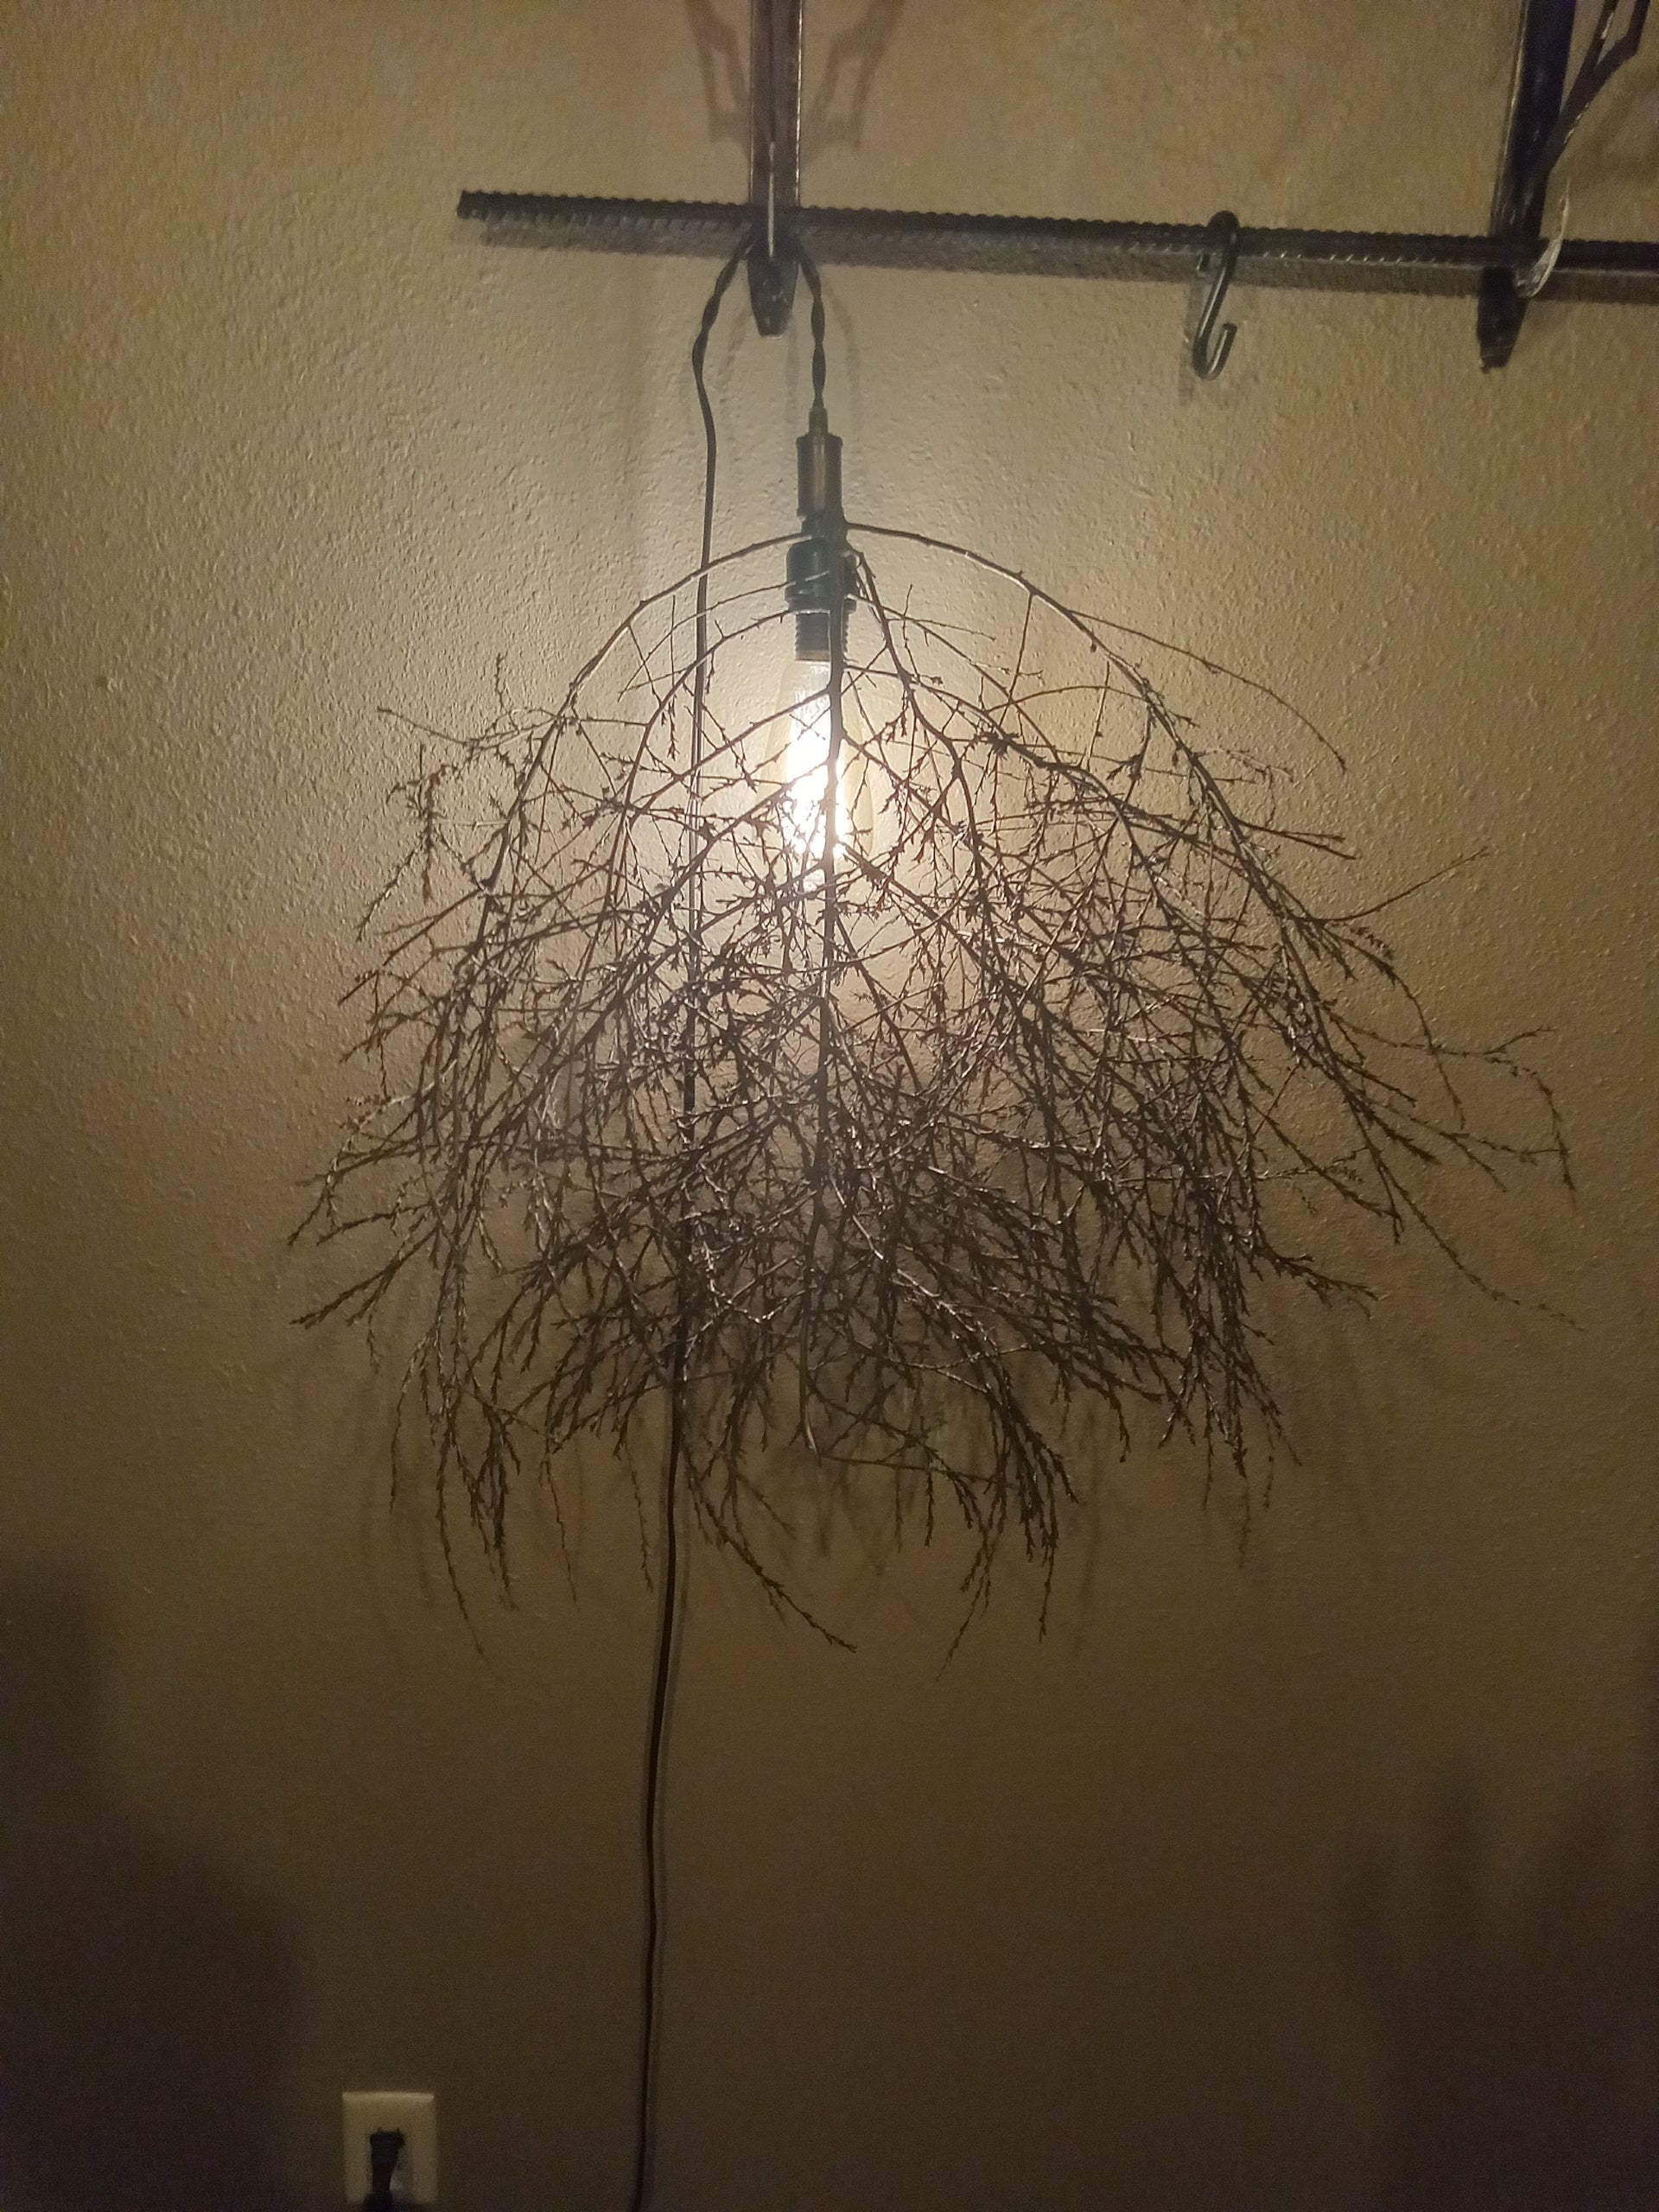 Dried Tumbleweed For Use as Room Decor